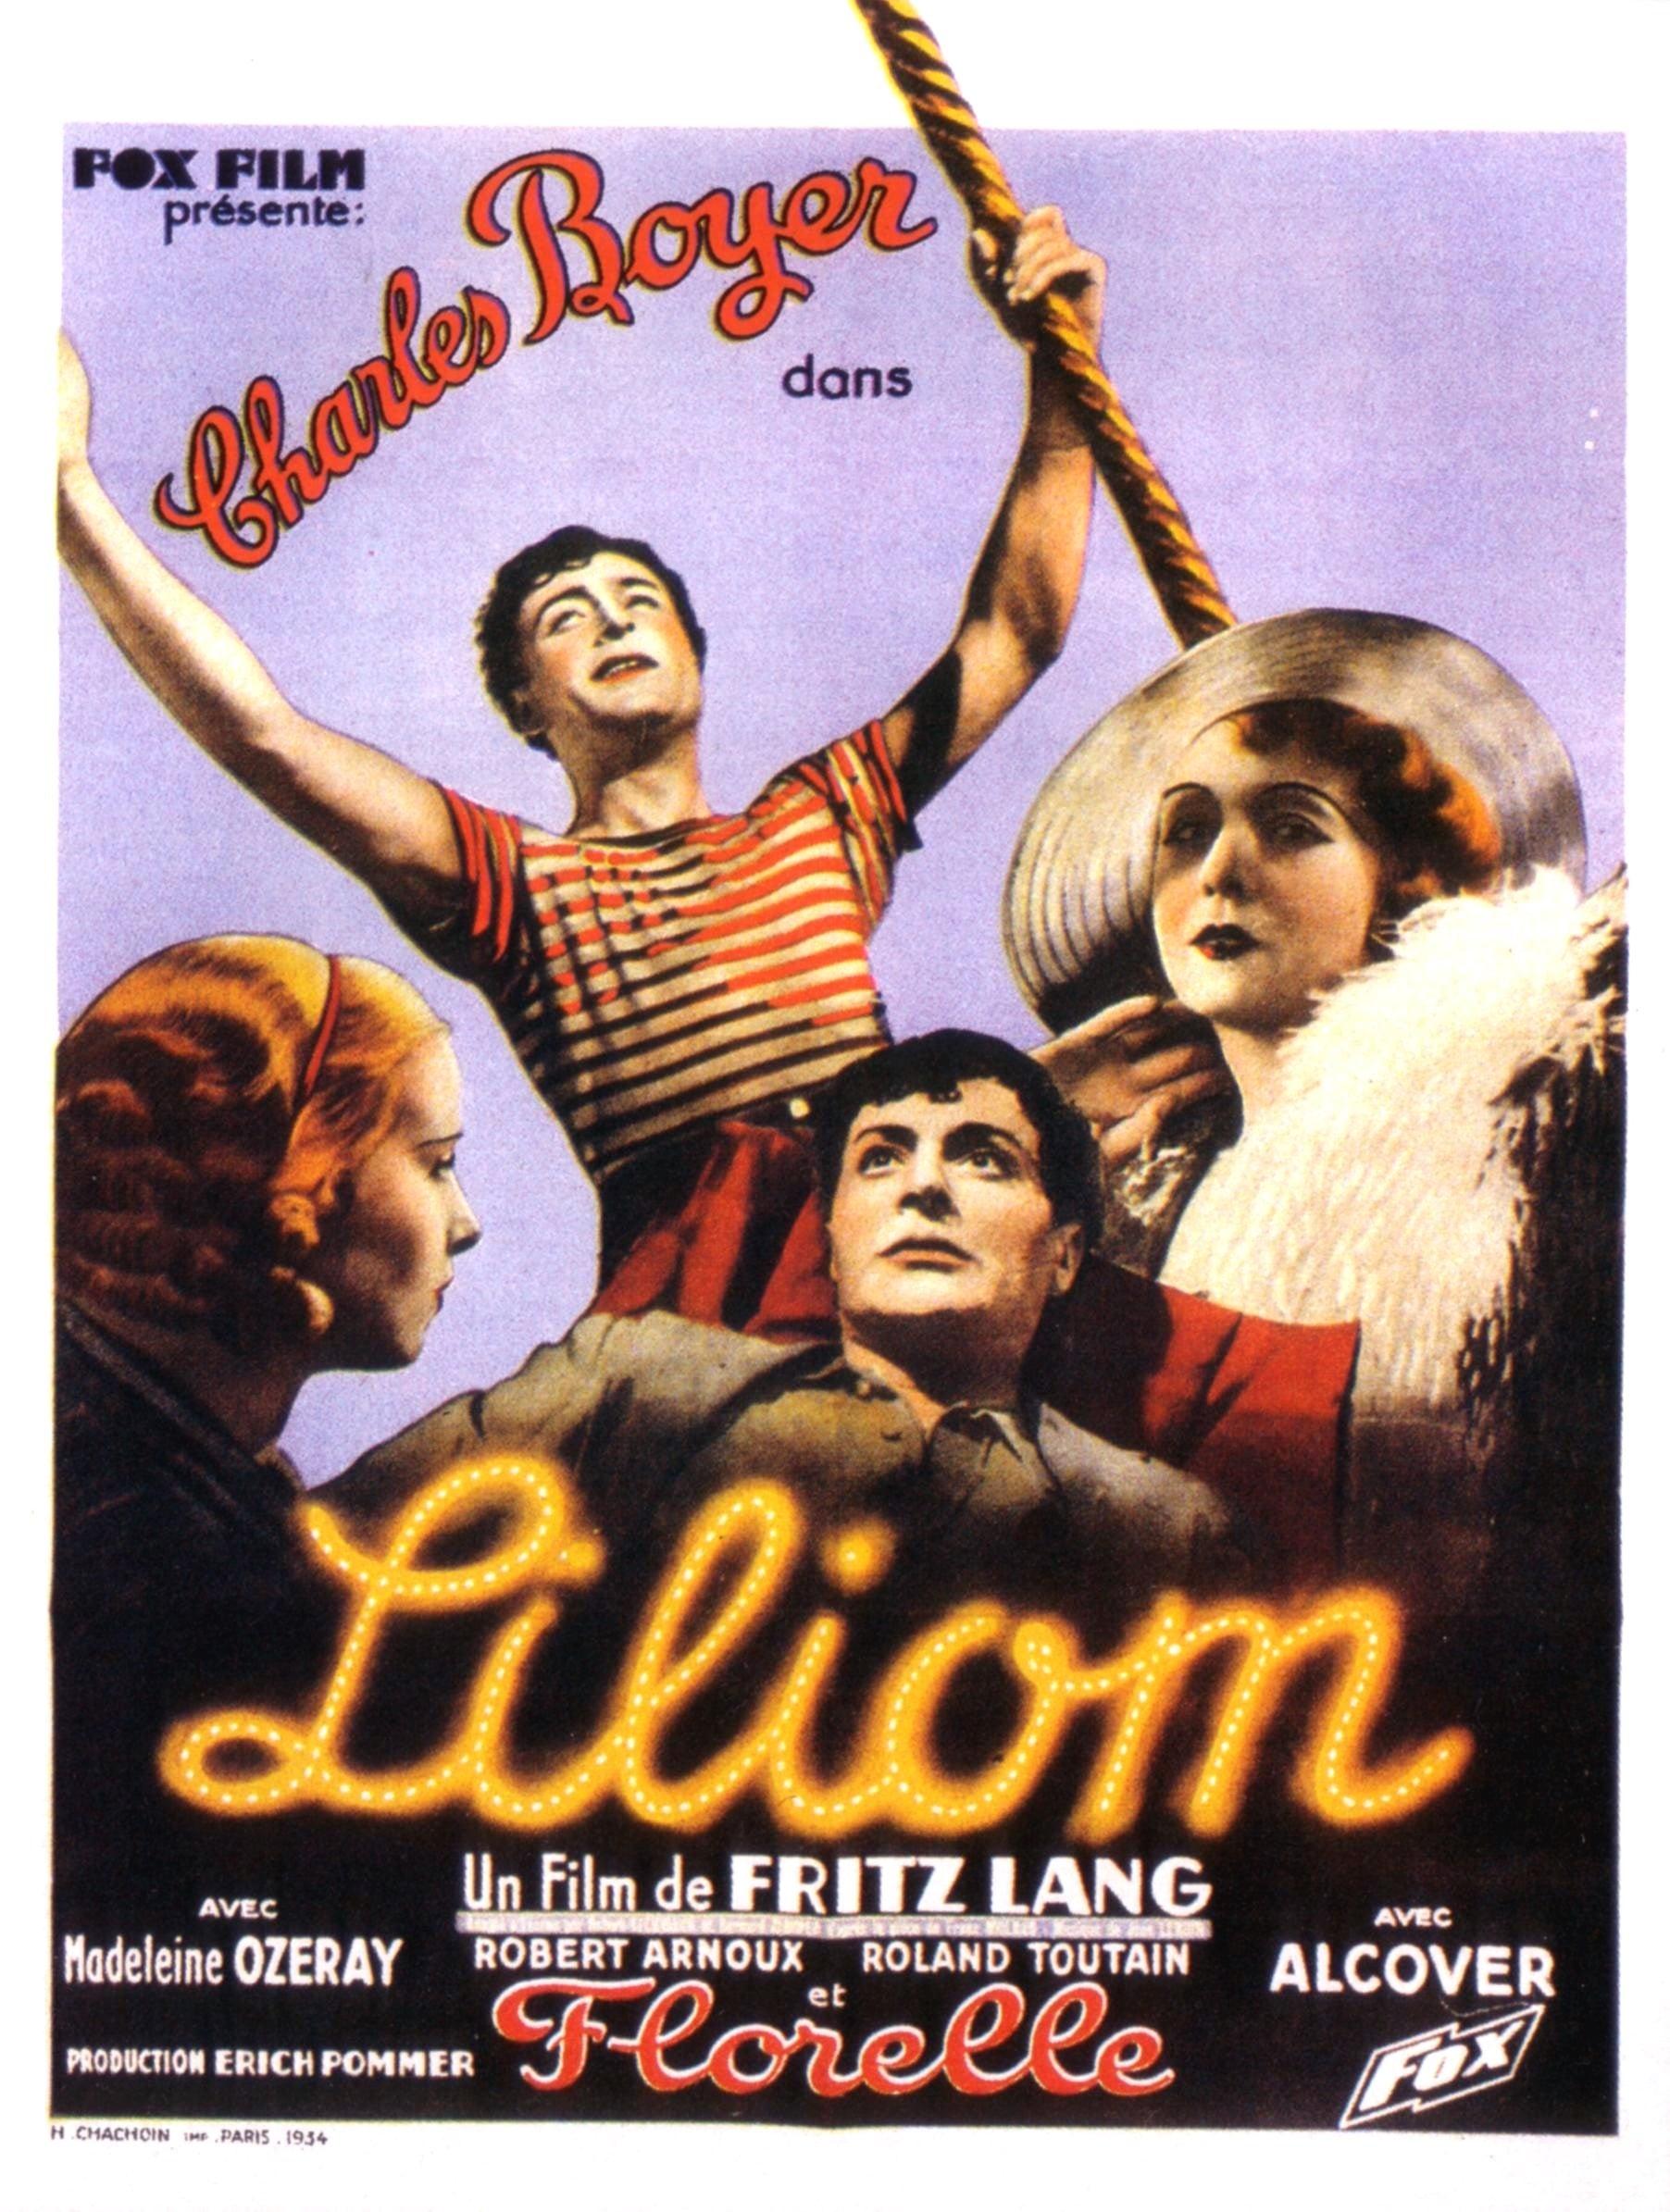 Liliom poster